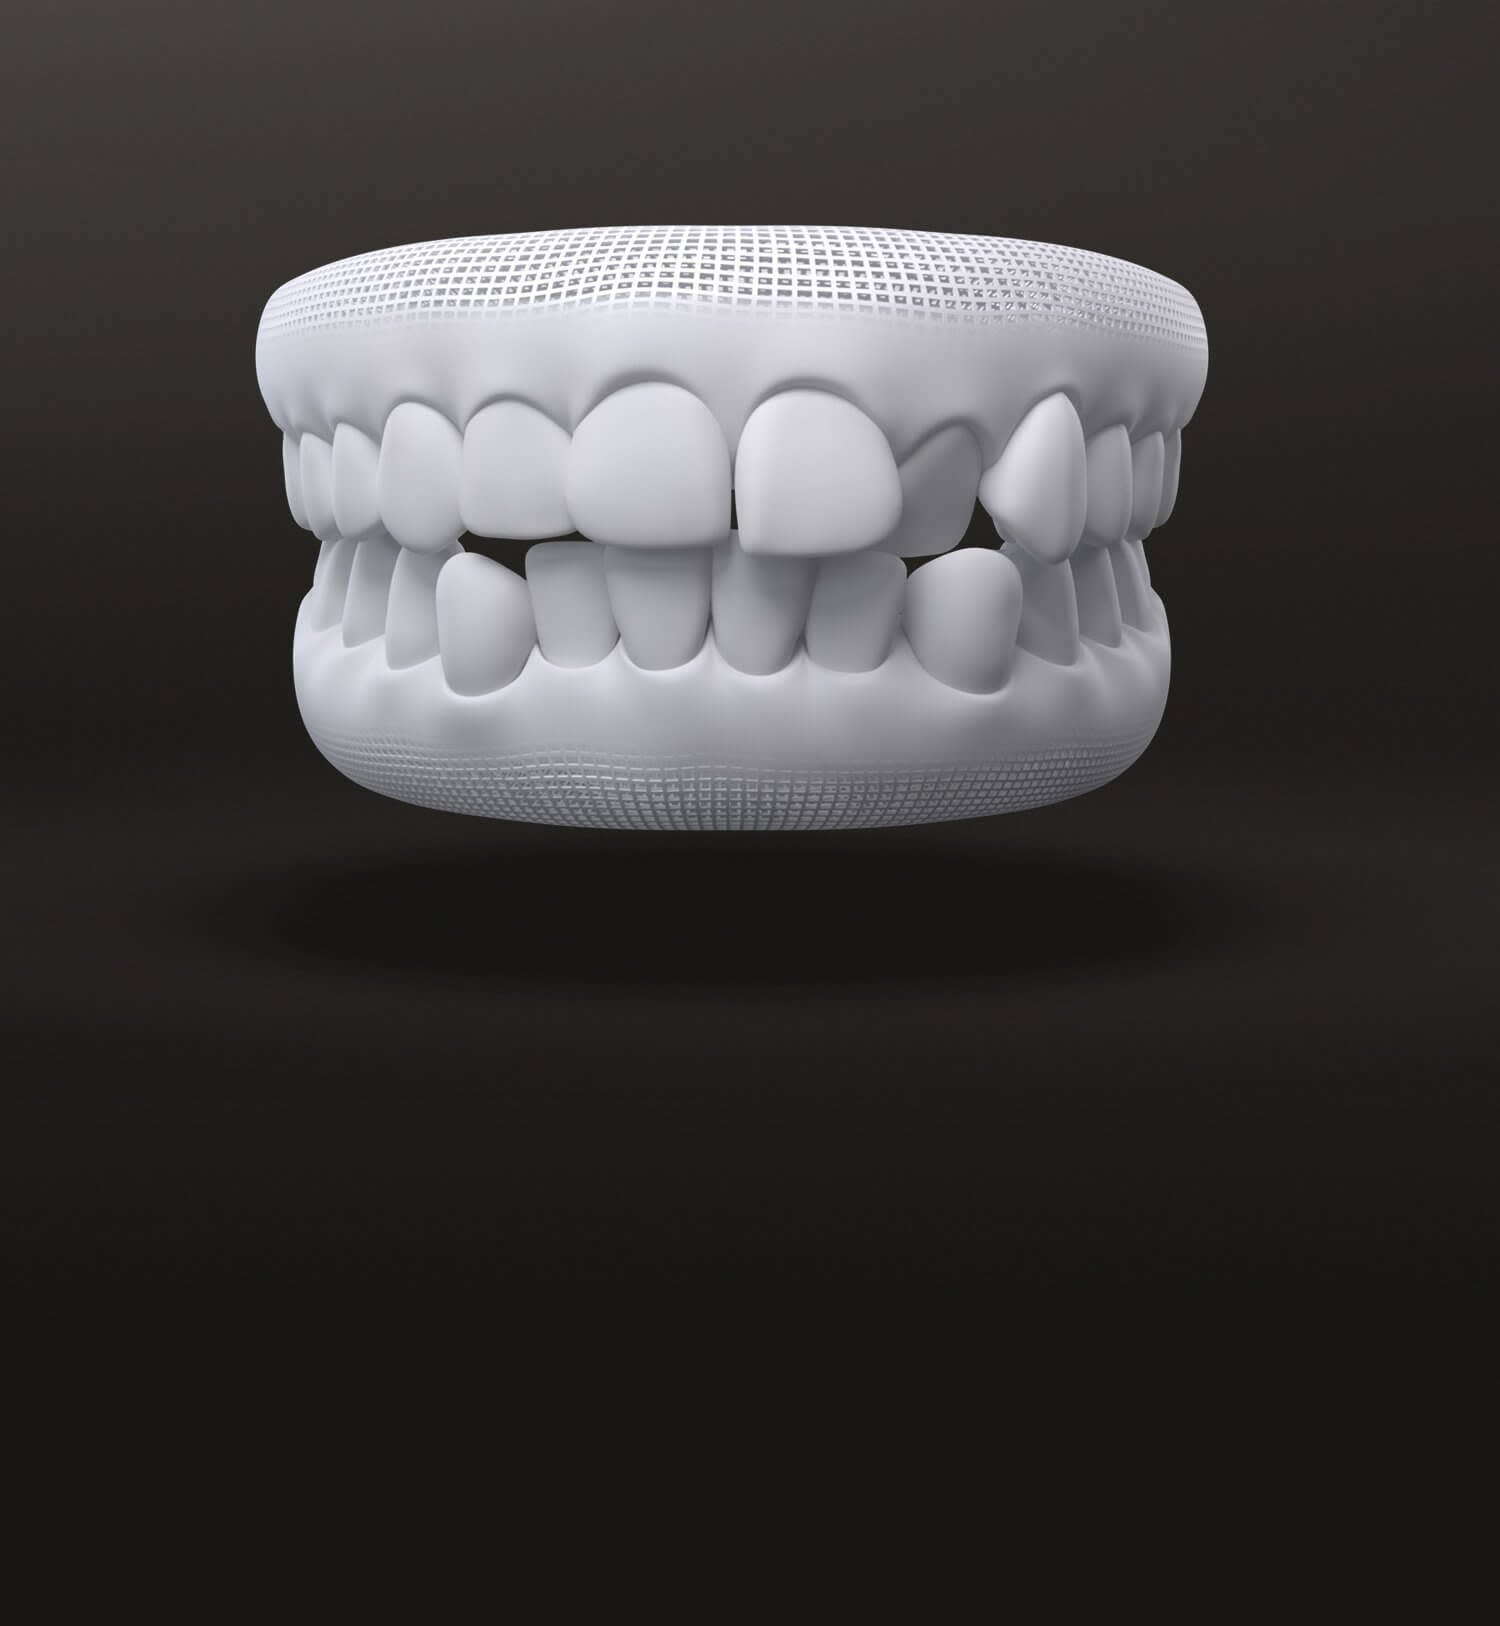 Straight teeth 3d model - Invisalign UK